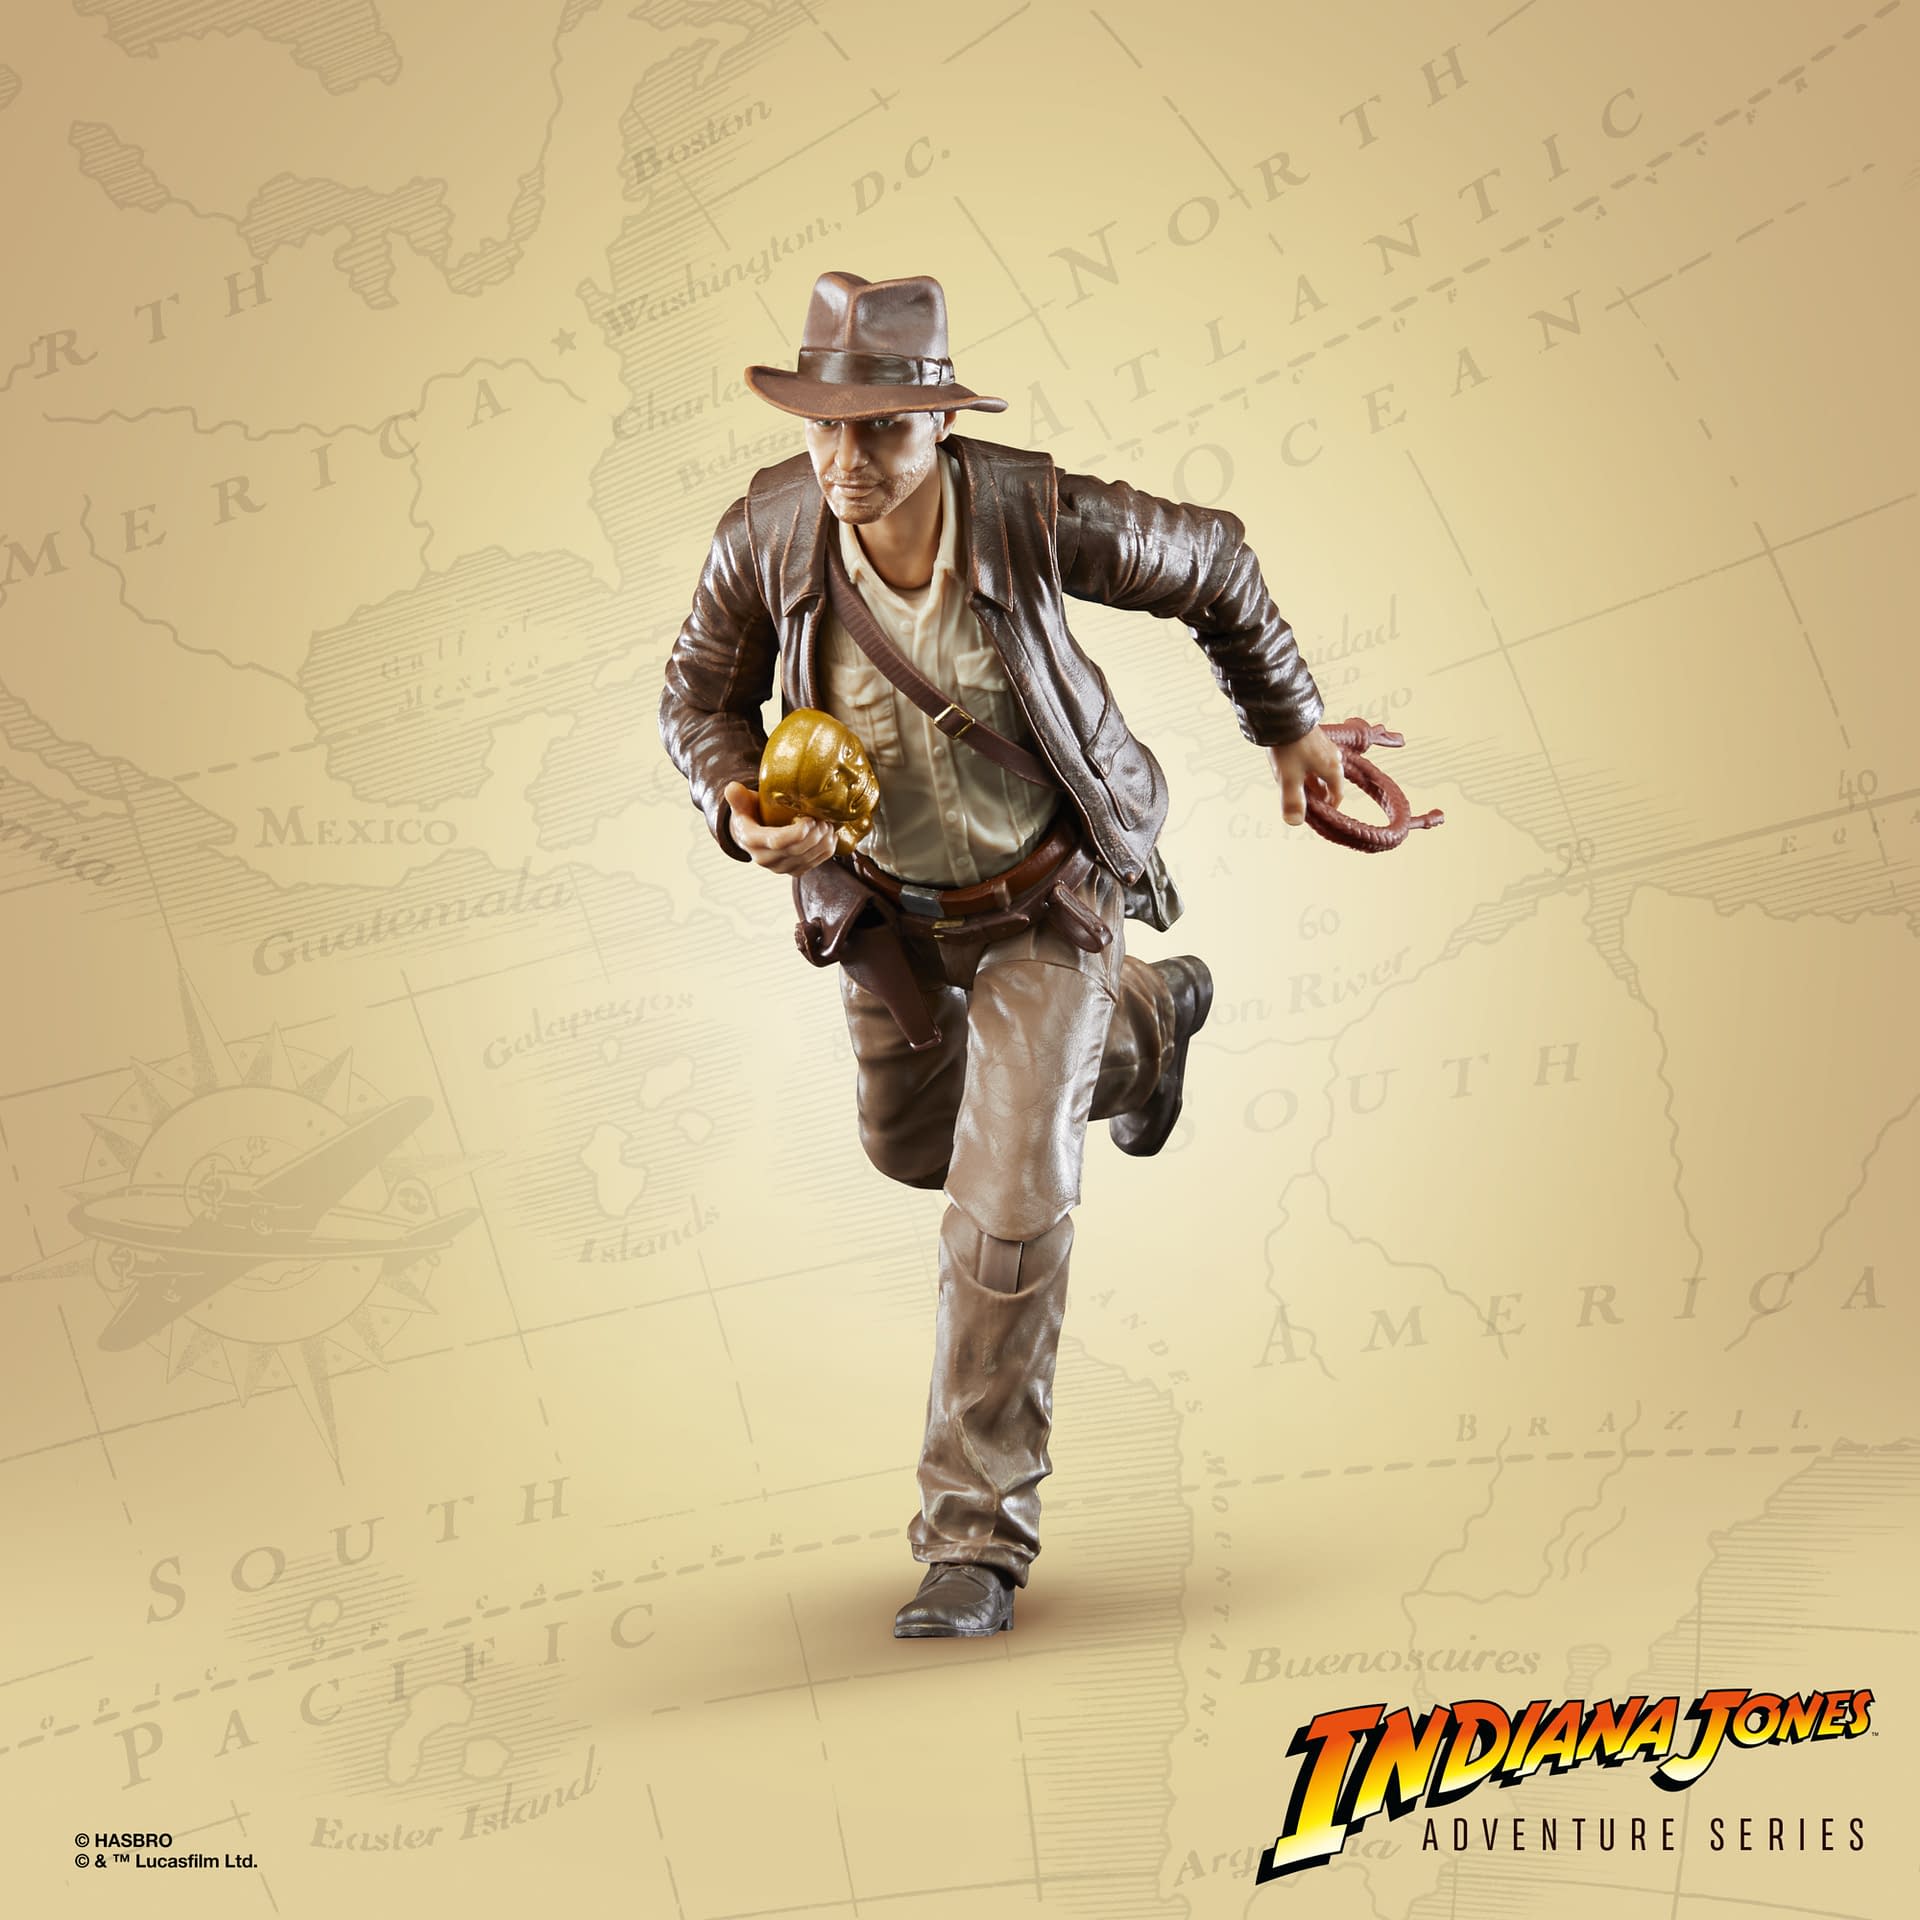 Indiana Jones Kicks Off Hasbro's Adventure Series, Pre-Orders Are Live